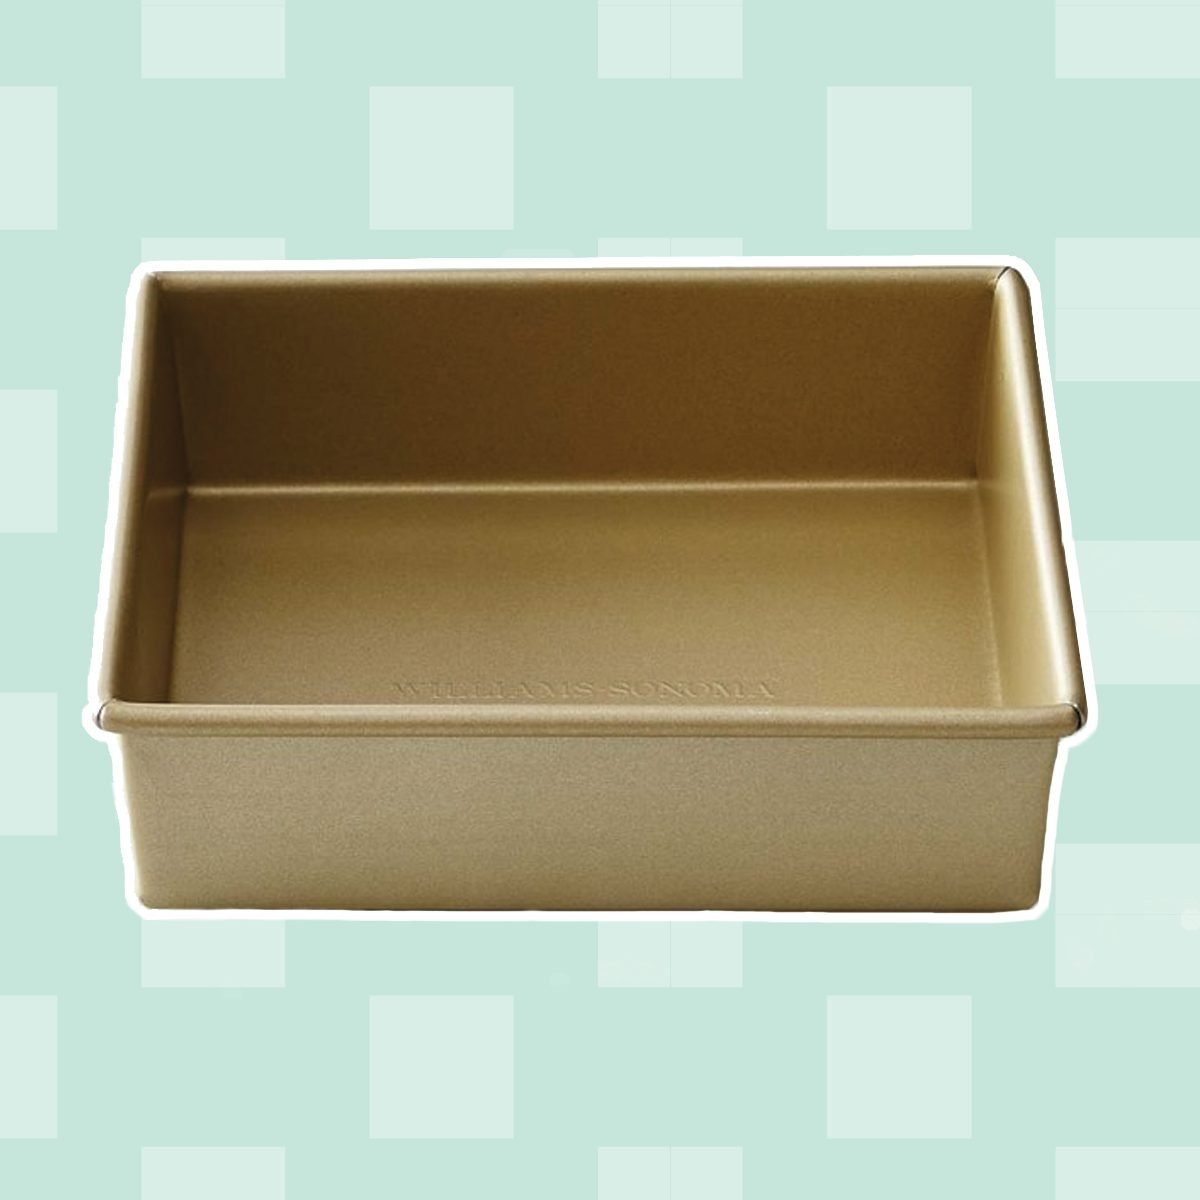 Taste of Home® 8-inch Non-Stick Metal Square Baking Pan 